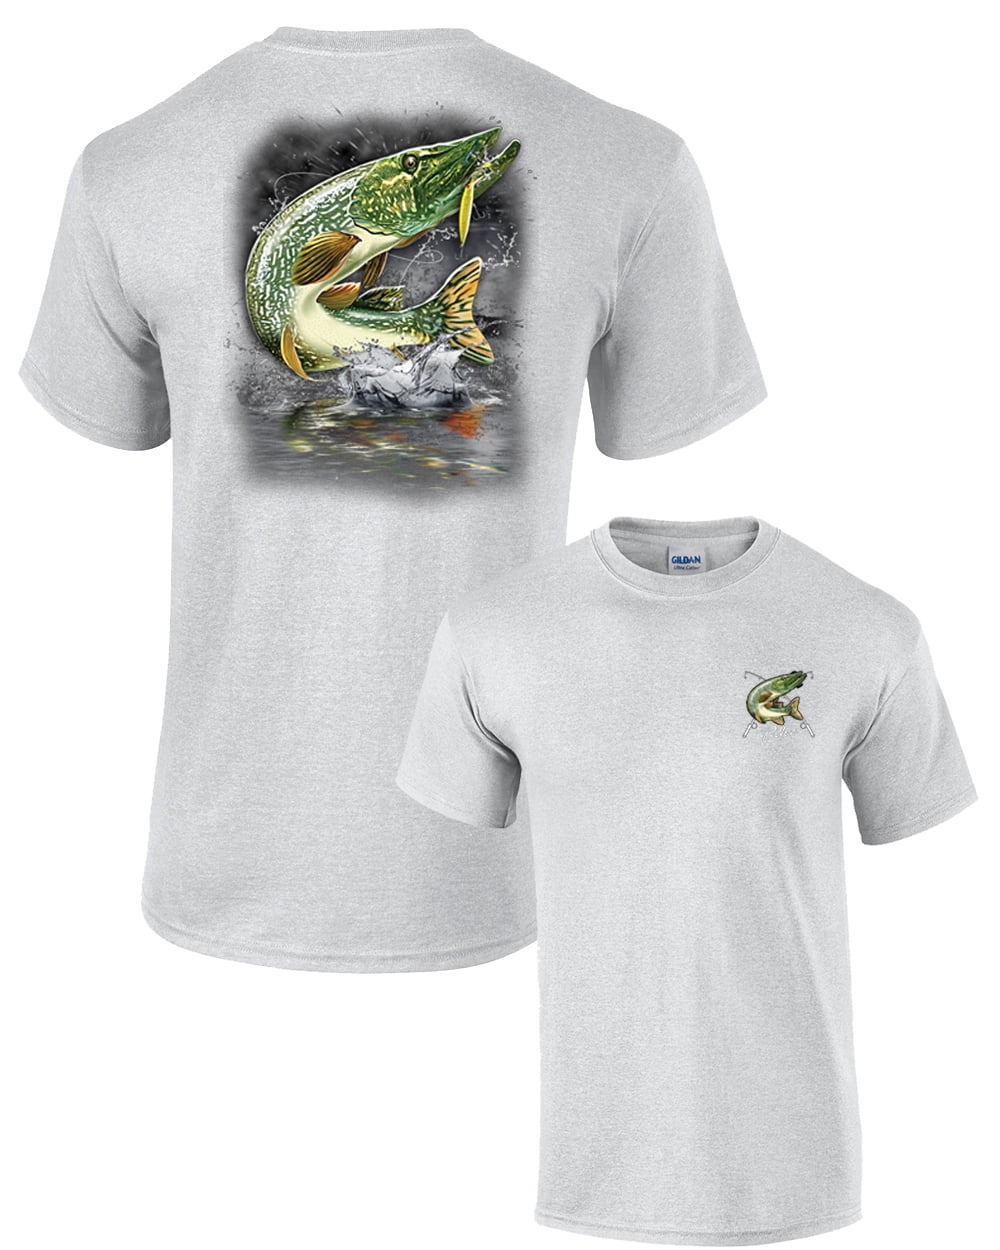 Buy Men's Fishing T-shirt With Beautiful American XL Asphalt